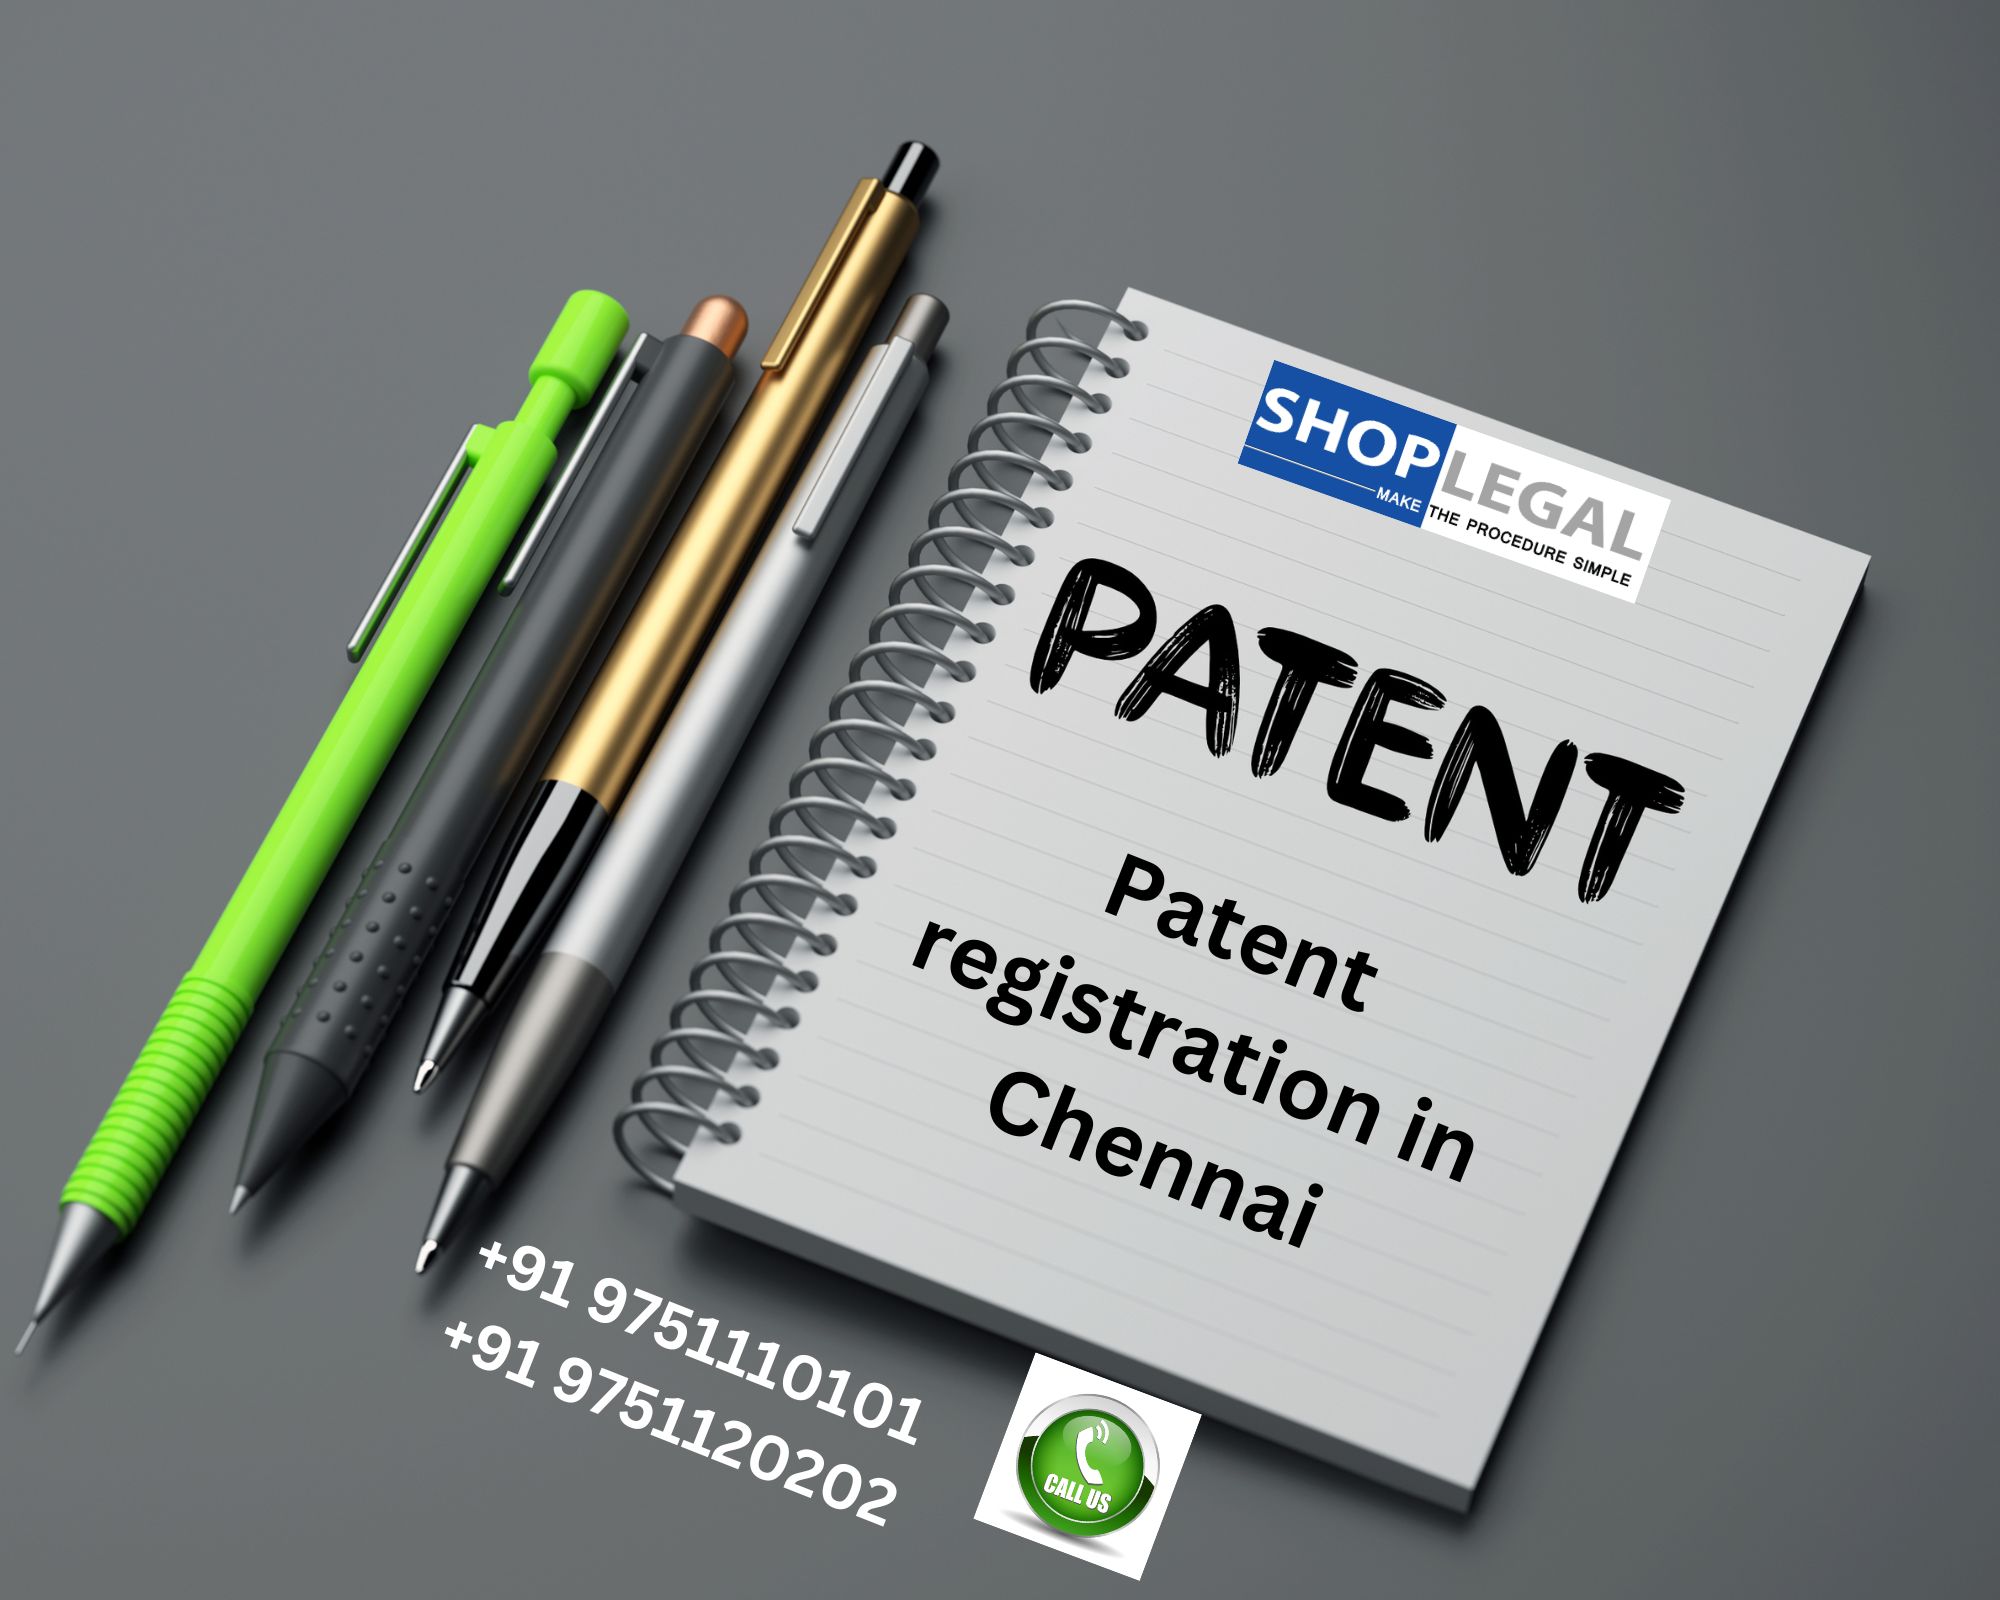 Patent registration in Chennai